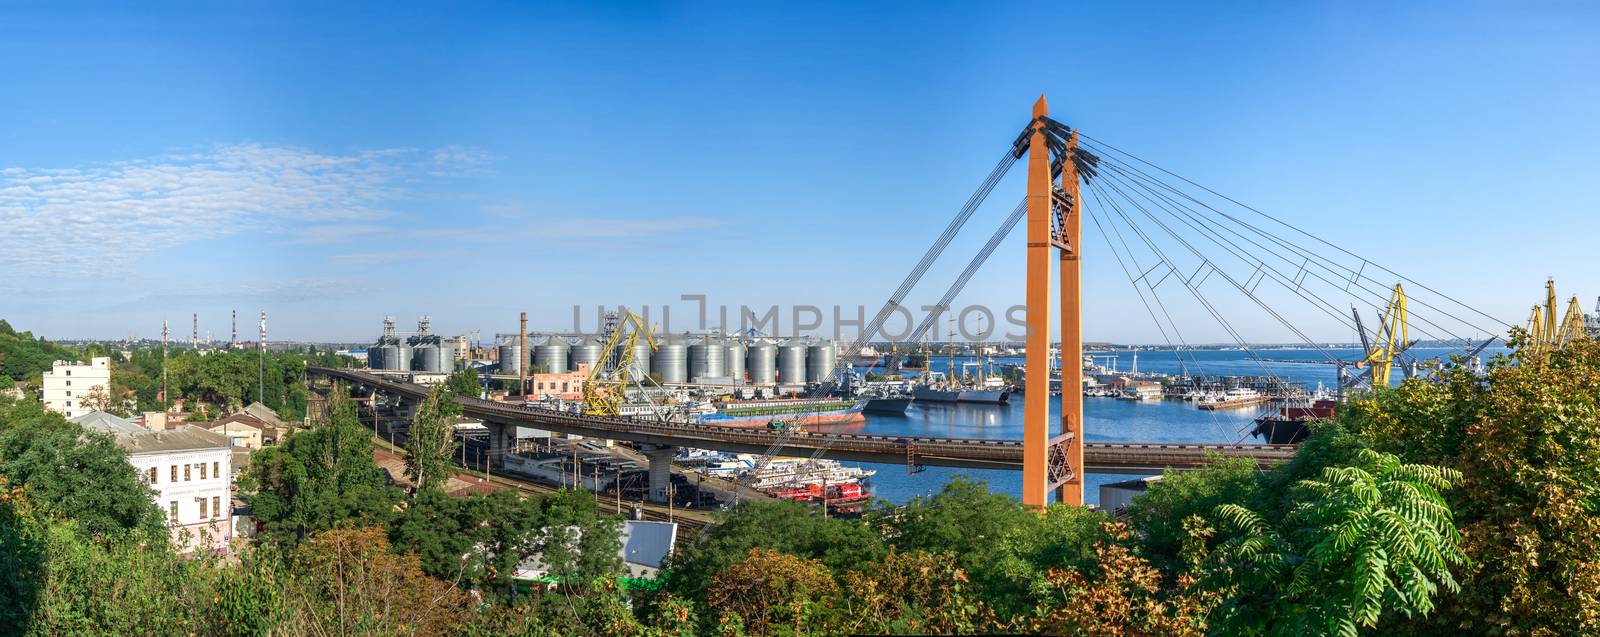 Practical harbor in Odessa seaport, Ukraine by Multipedia